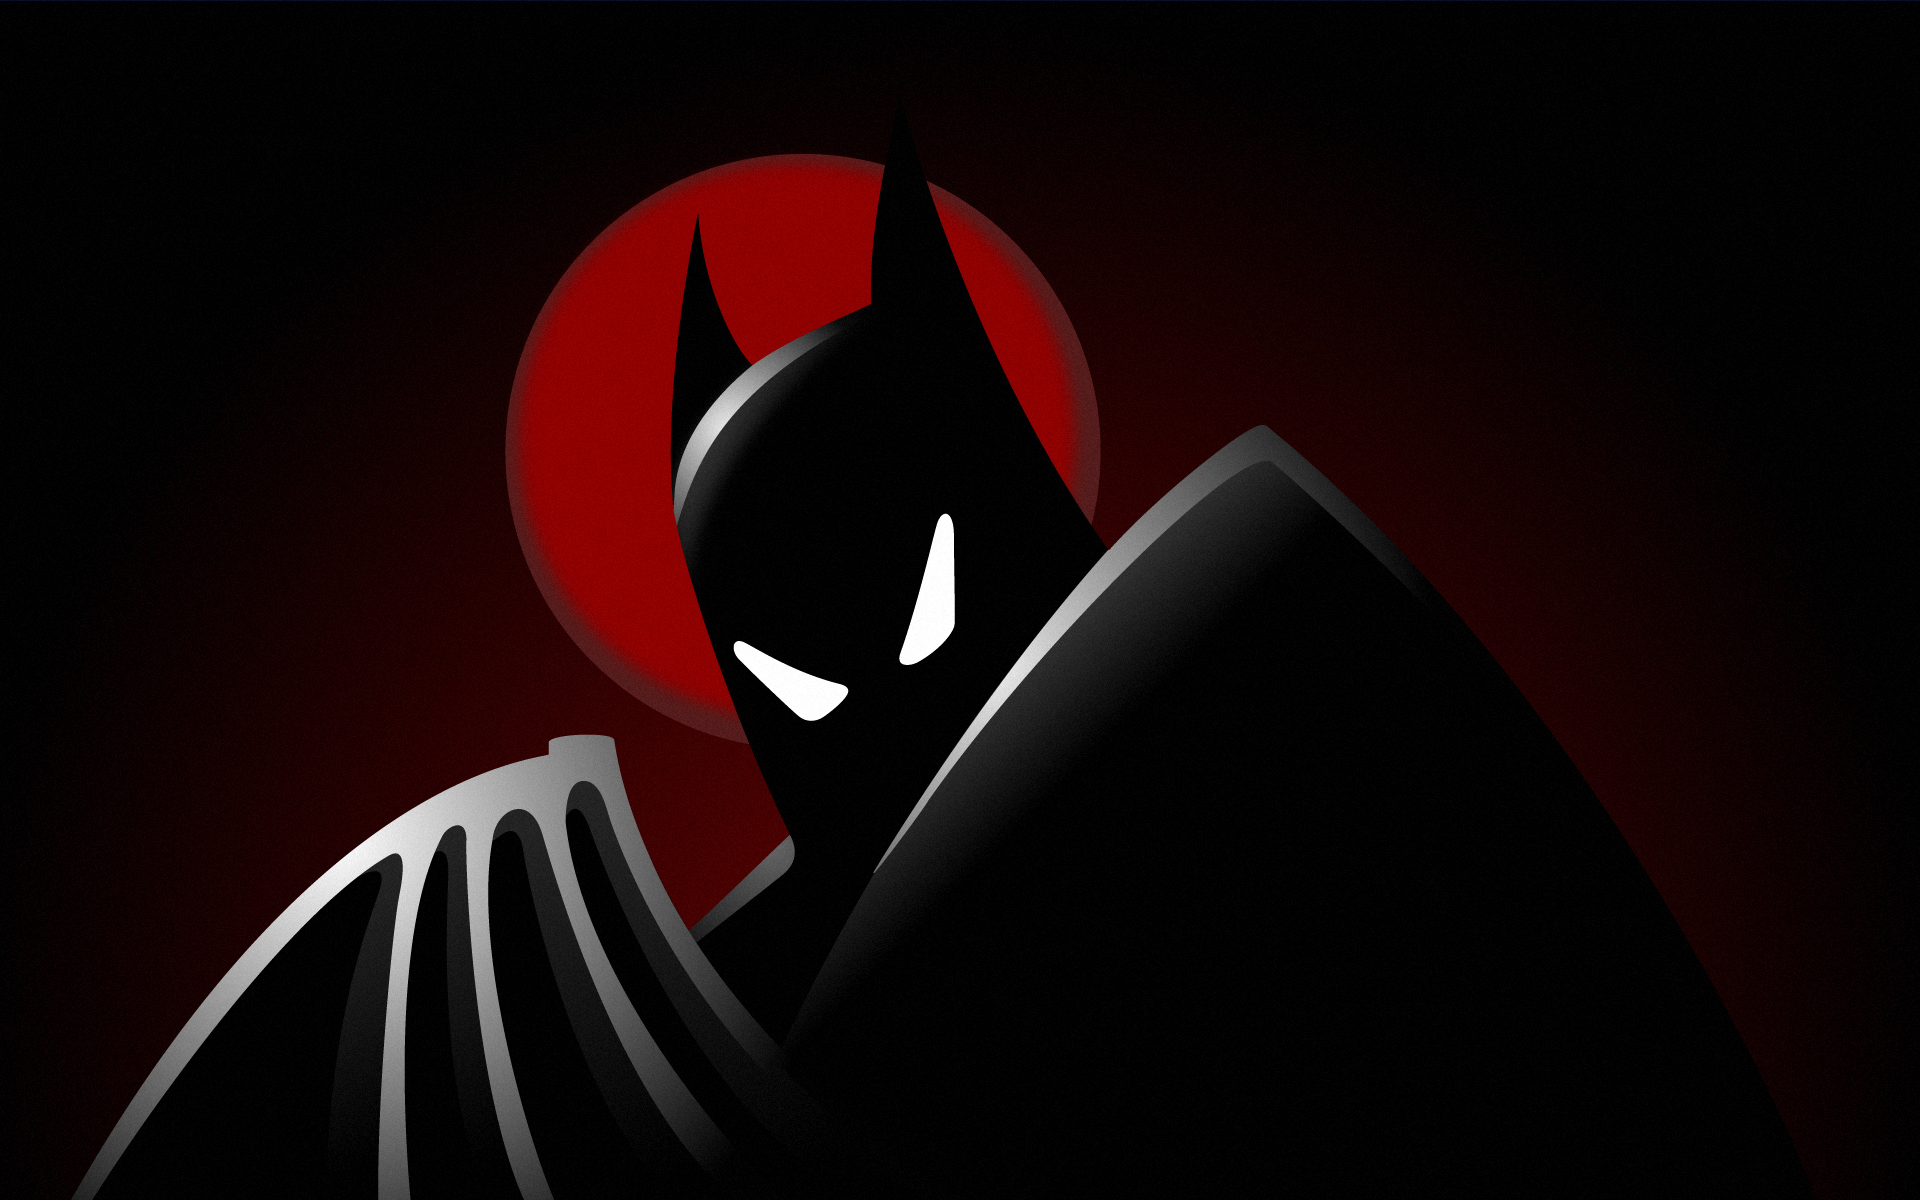 batman the animated series iphone wallpaper